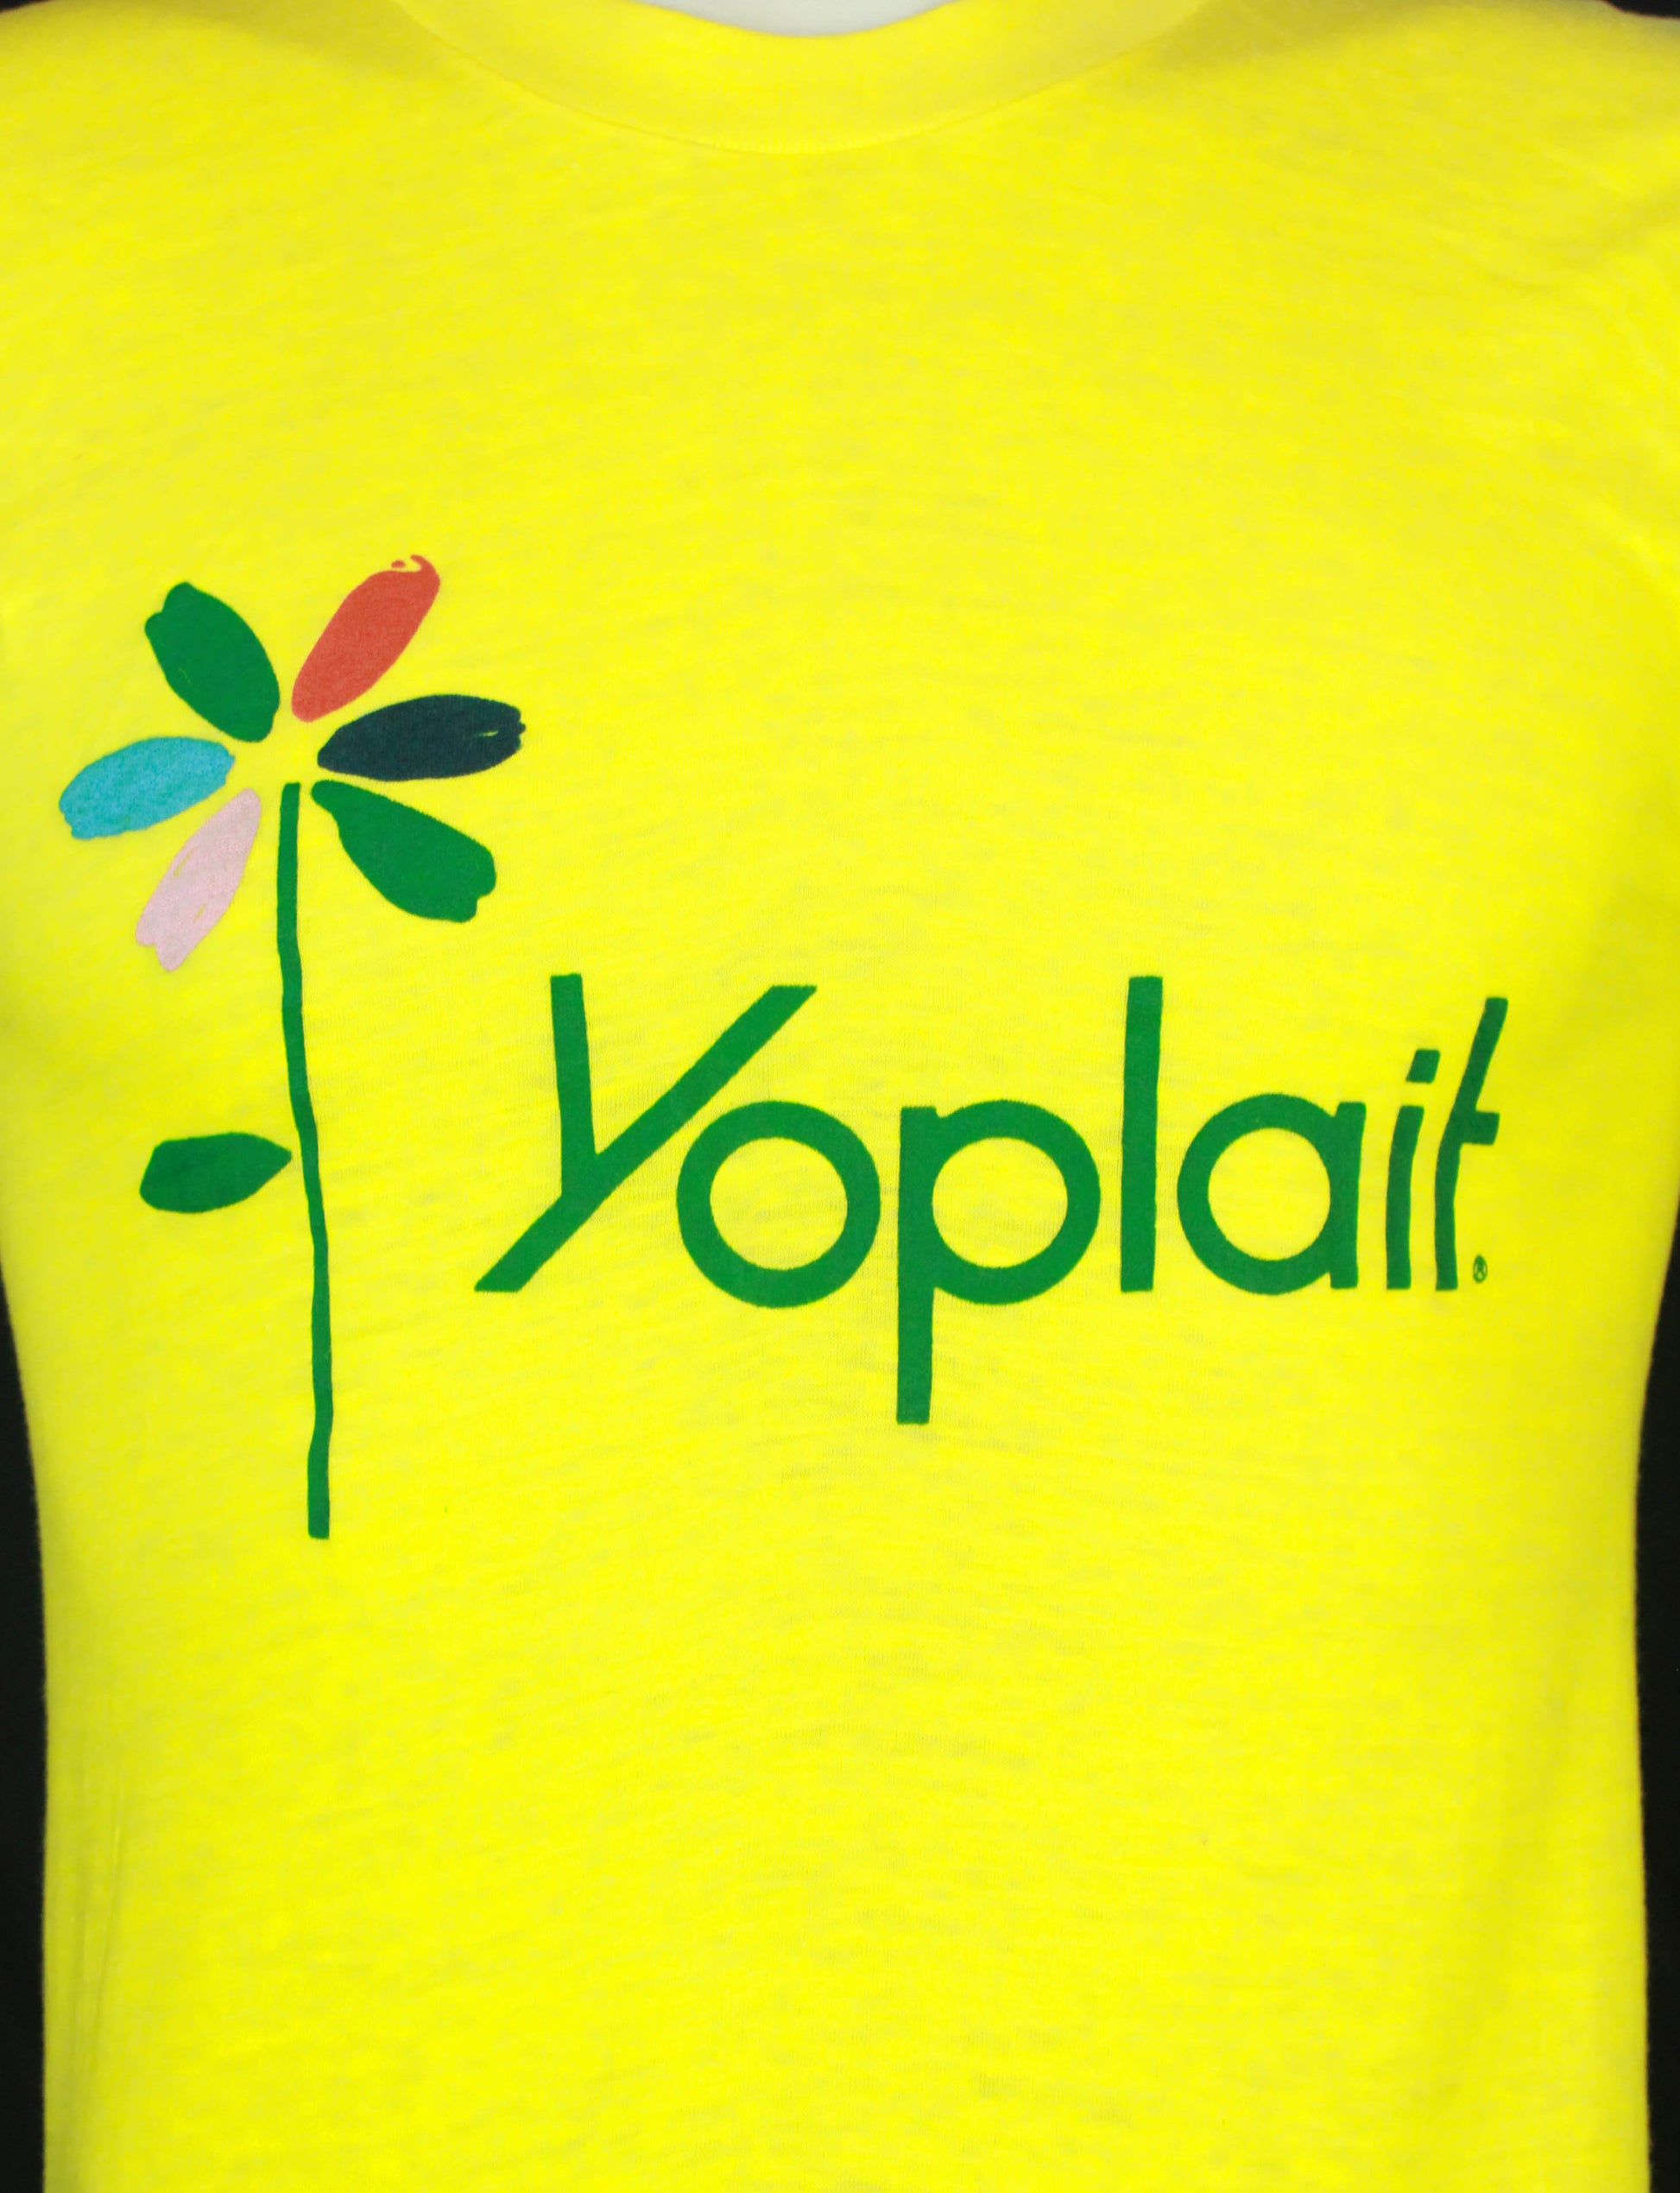 Vintage 80's Yoplait Yogurt Yellow Graphic T Shirt - S/M